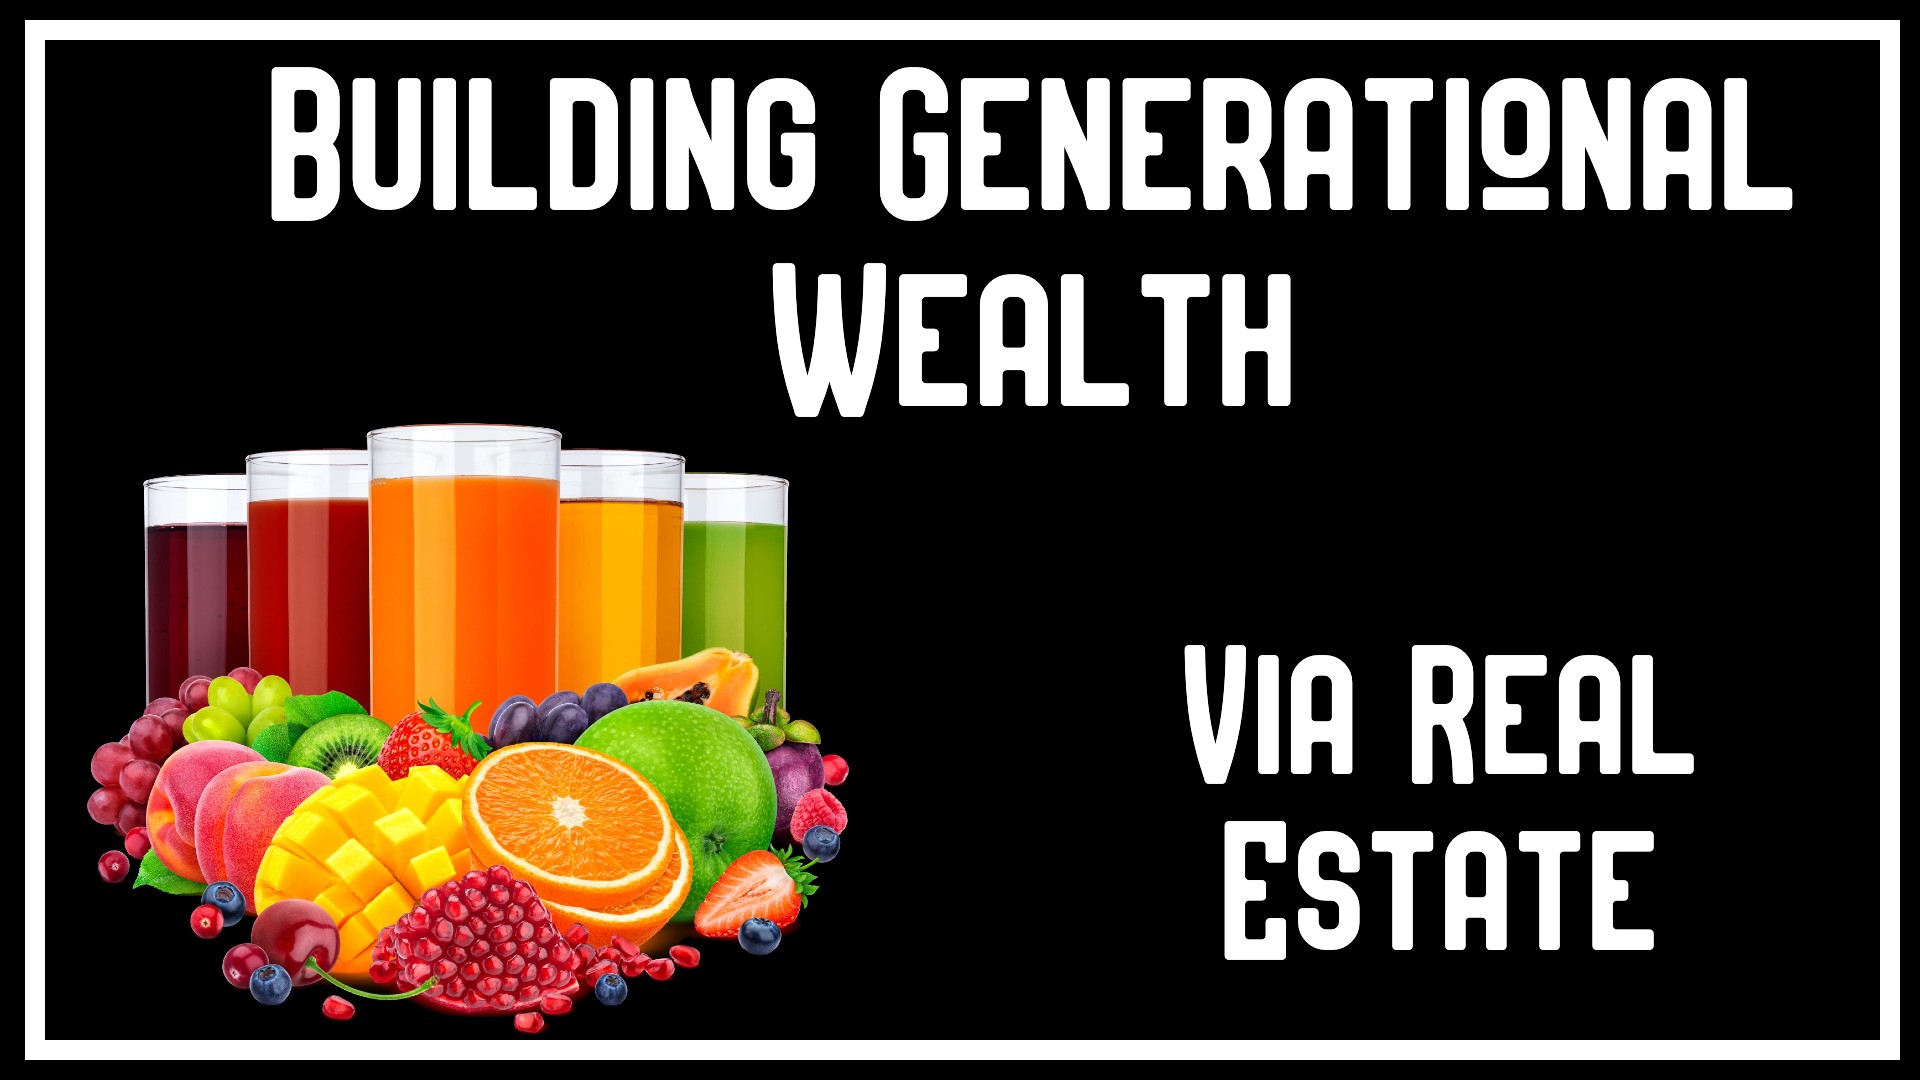 Building Generational Wealth: Via Real Estate